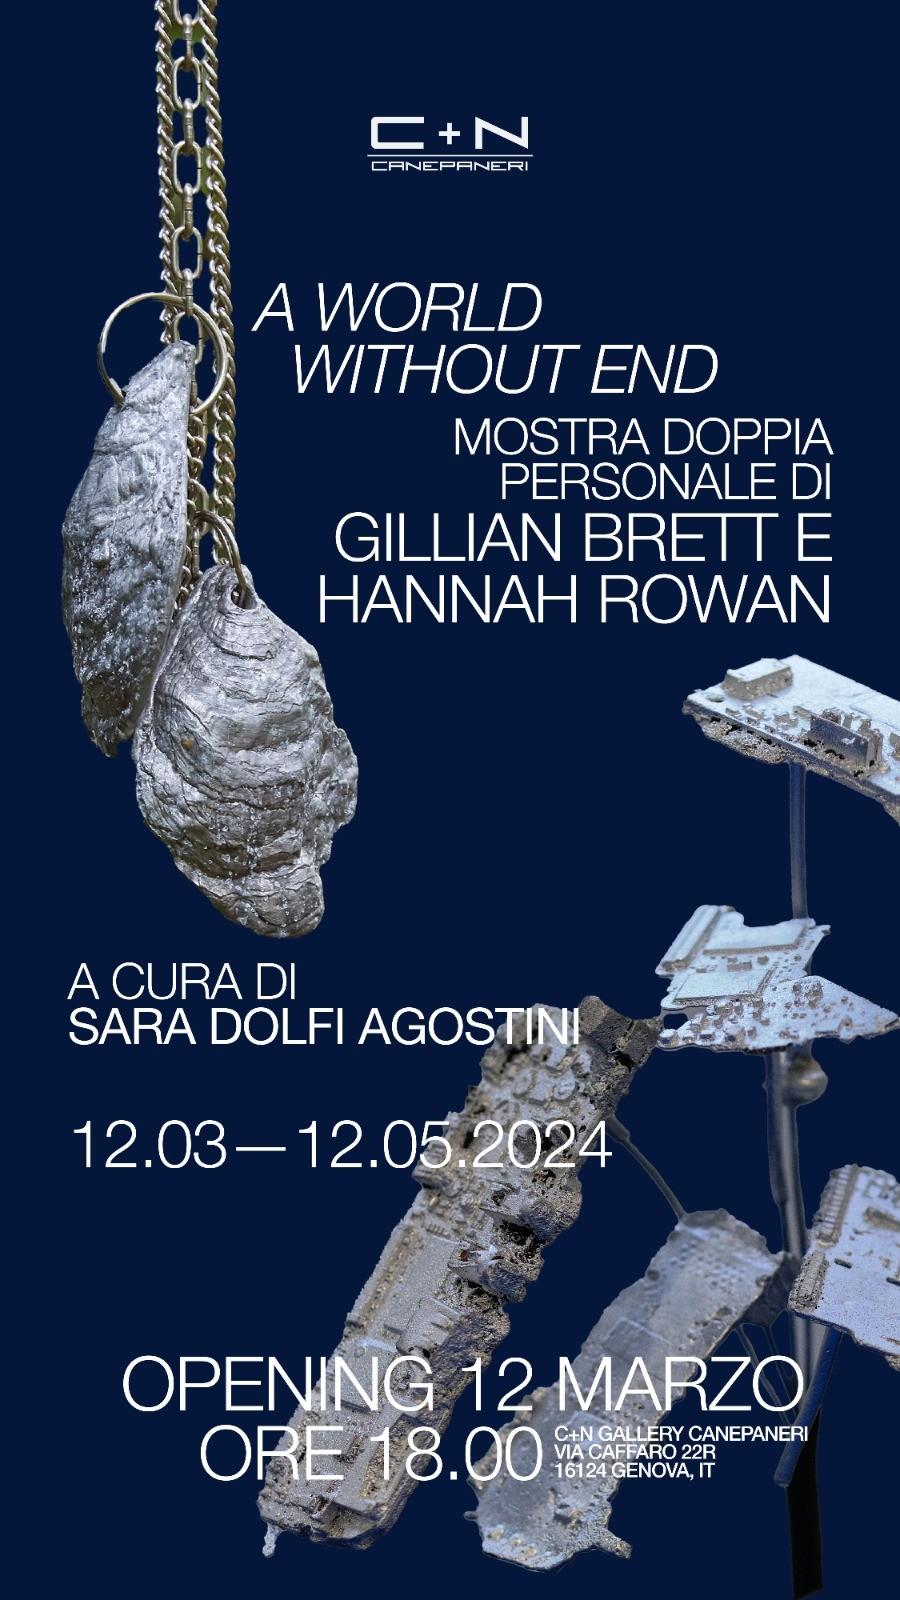 A World Without End, Gillian Brett, Hannah Rowan, Duo Show, Genova